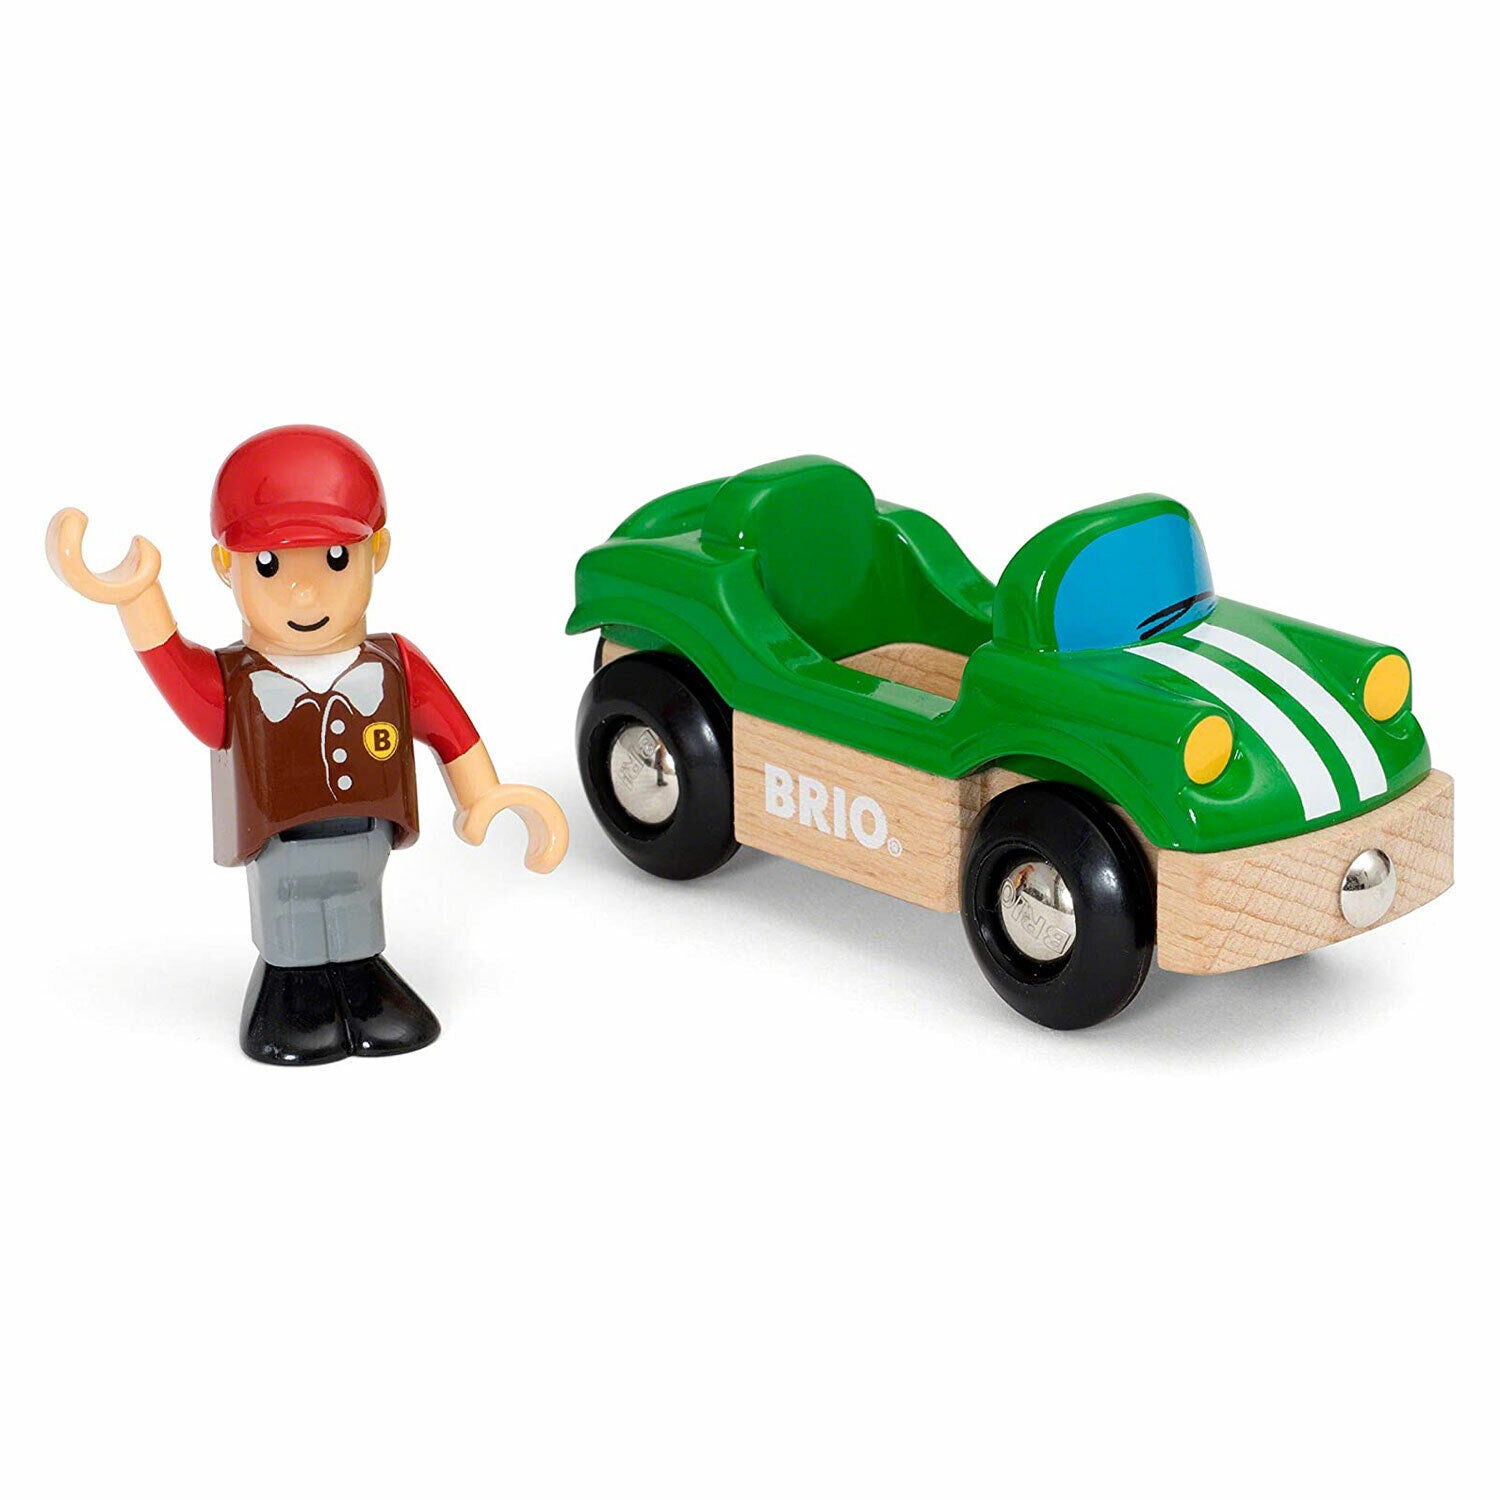 New BRIO World Sports Car 33937 - Fast & Fun Toy for Kids